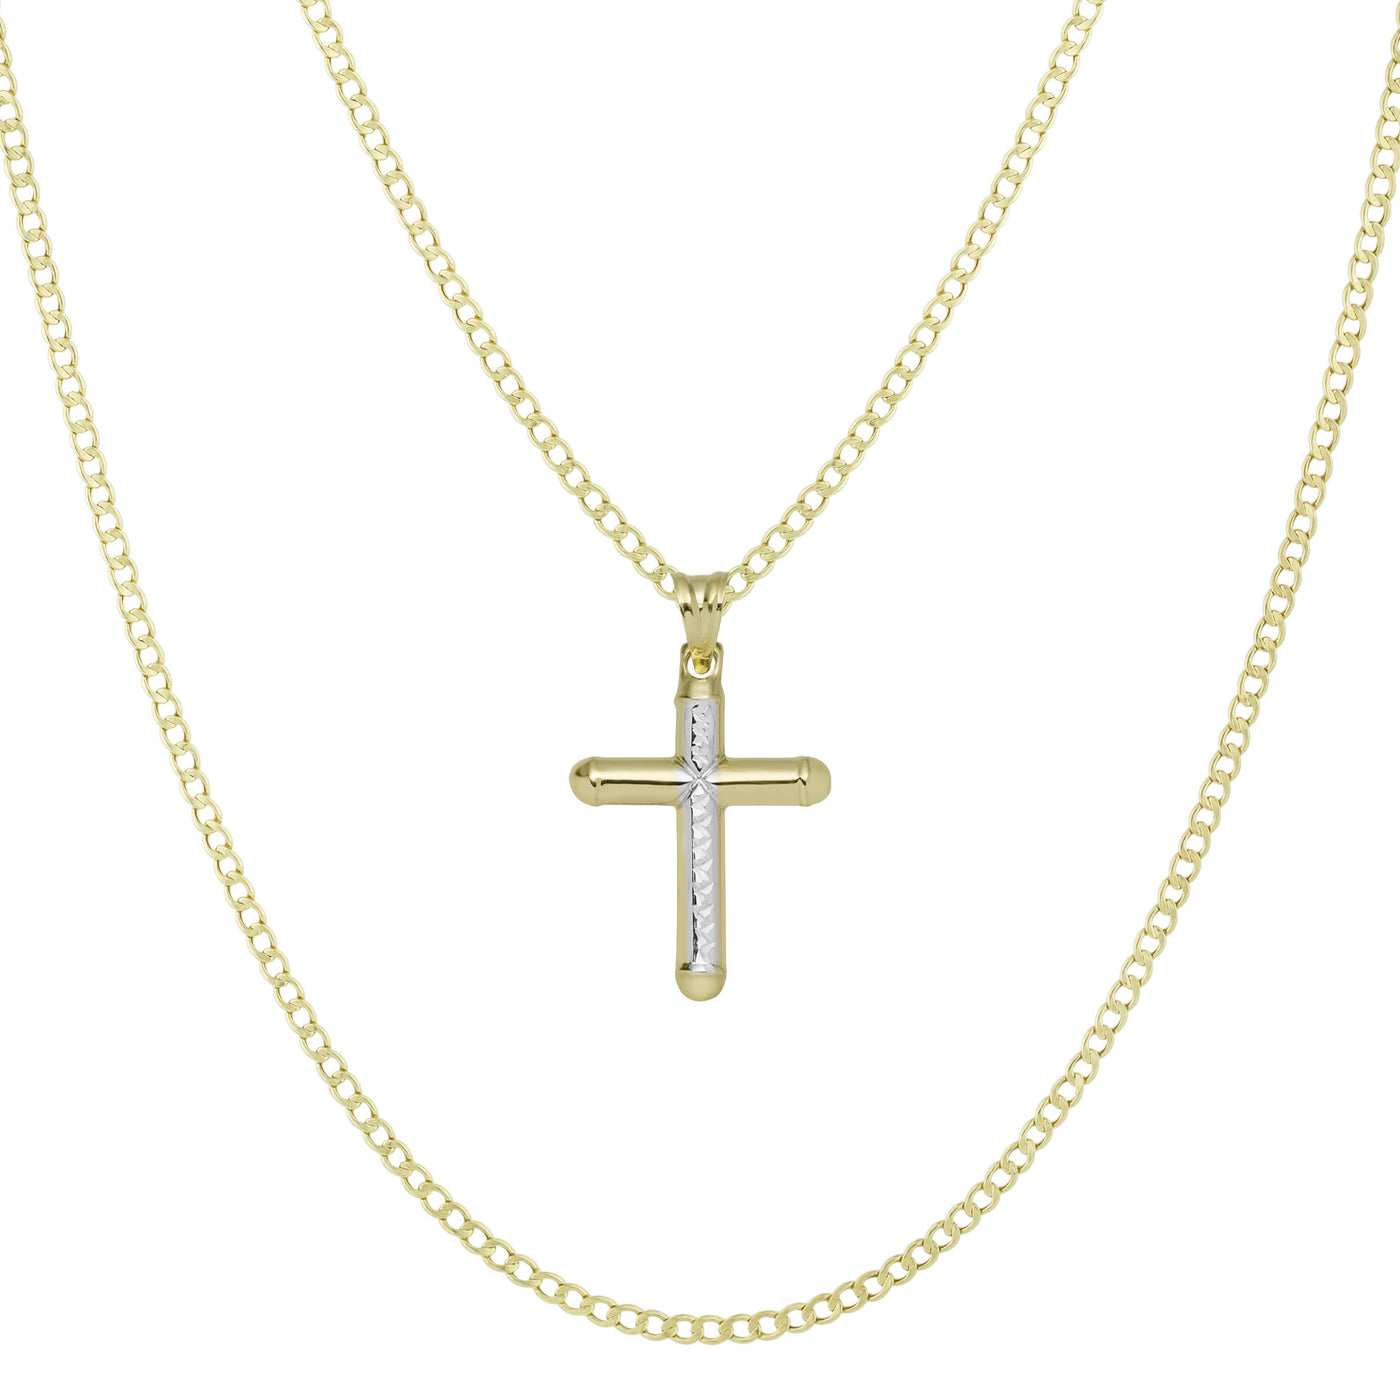 1 3/8" Diamond-Cut Cross Tube Pendant & Chain Necklace Set 10K Yellow White Gold